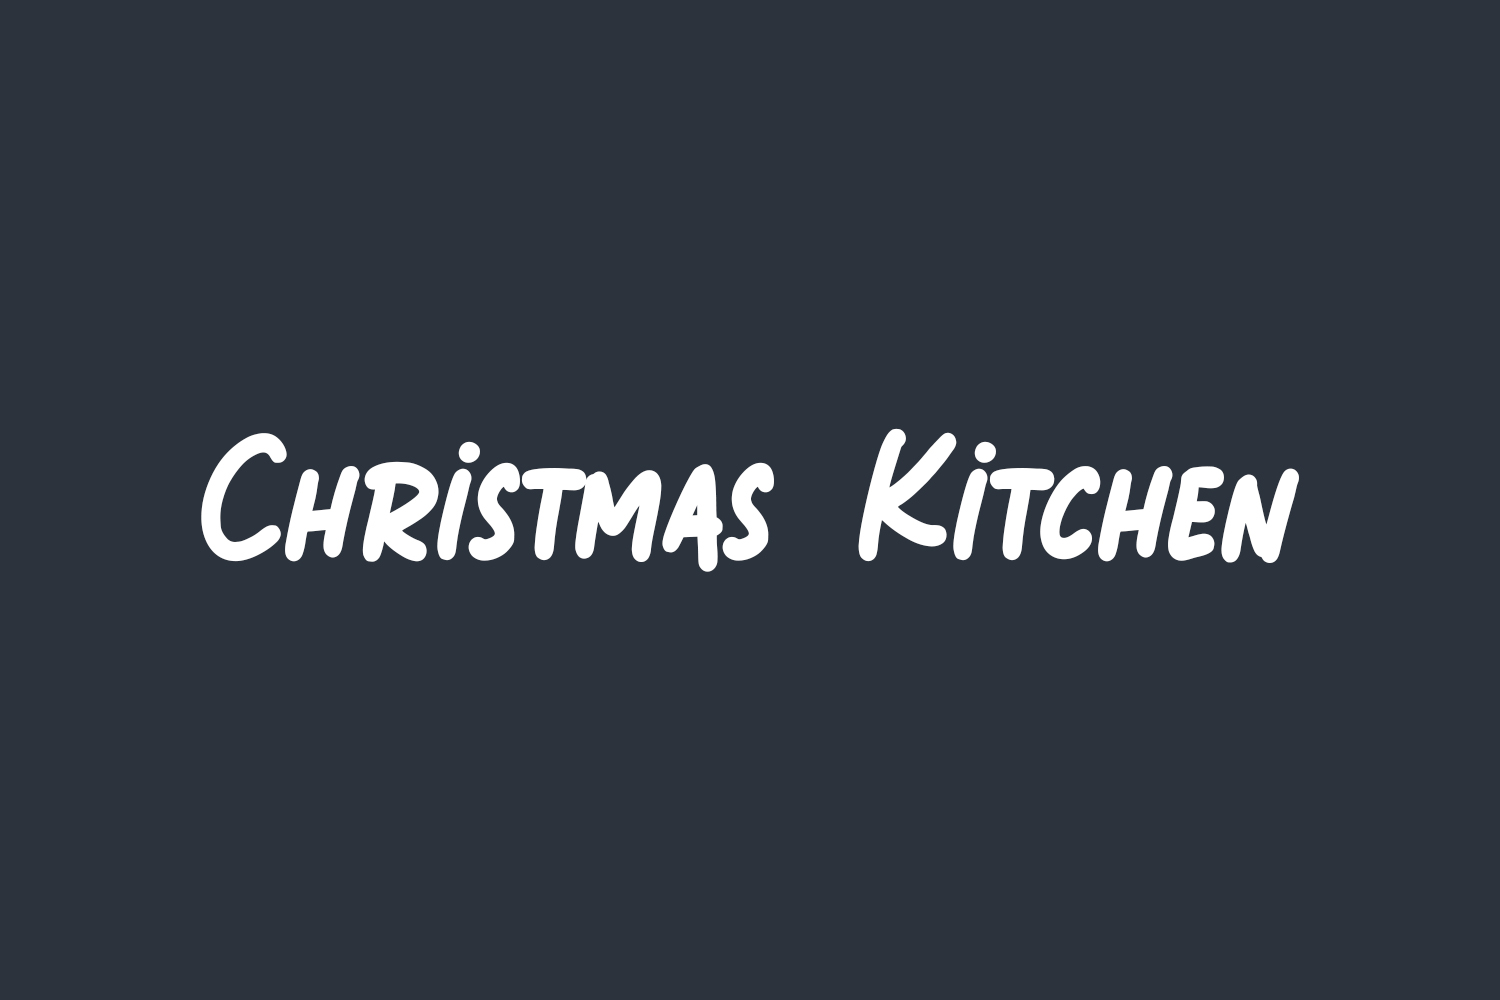 Christmas Kitchen Free Font